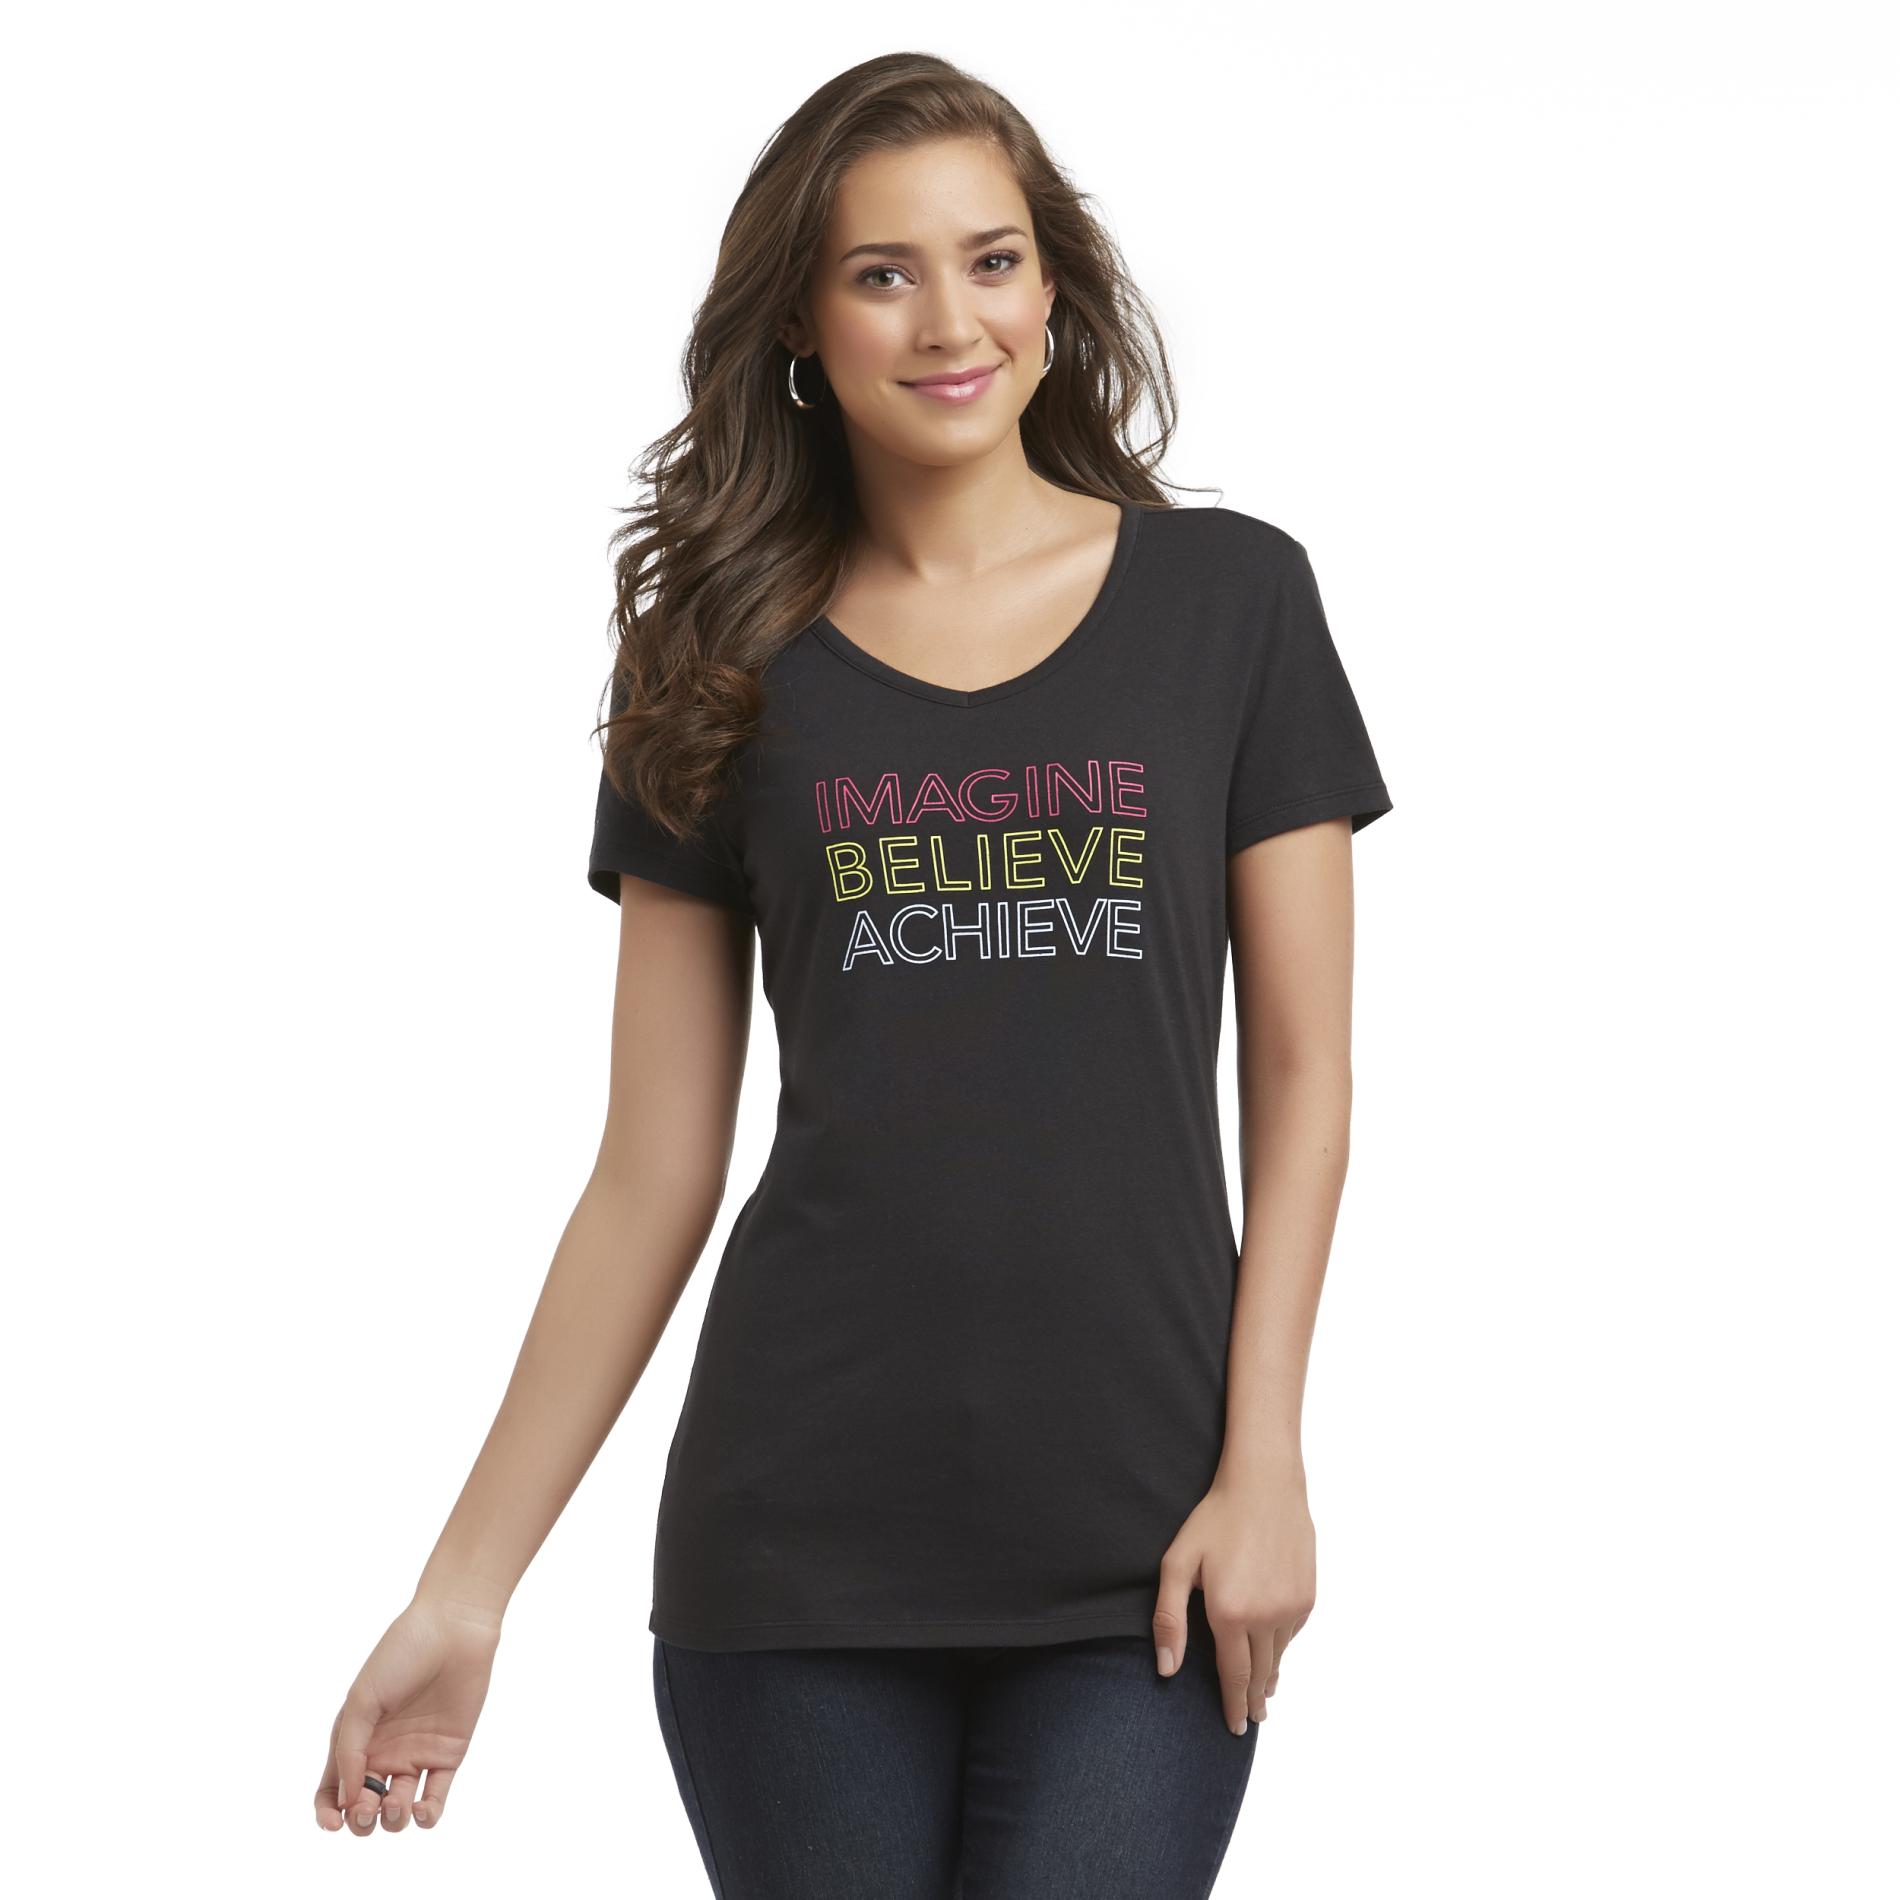 Impact by Jillian Michaels Women's Graphic T-Shirt - Imagine  Believe  Achieve